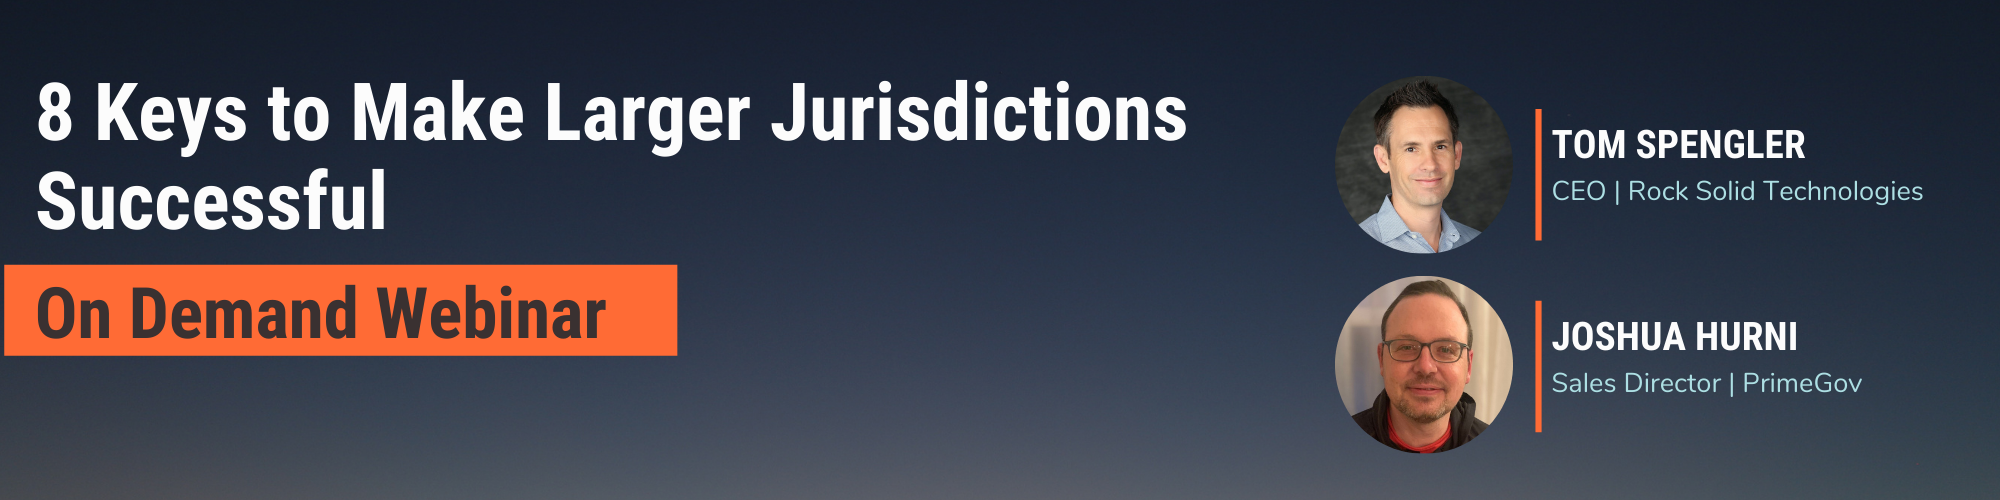 On demand webinar: 8 keys to make larger jurisdictions successful.